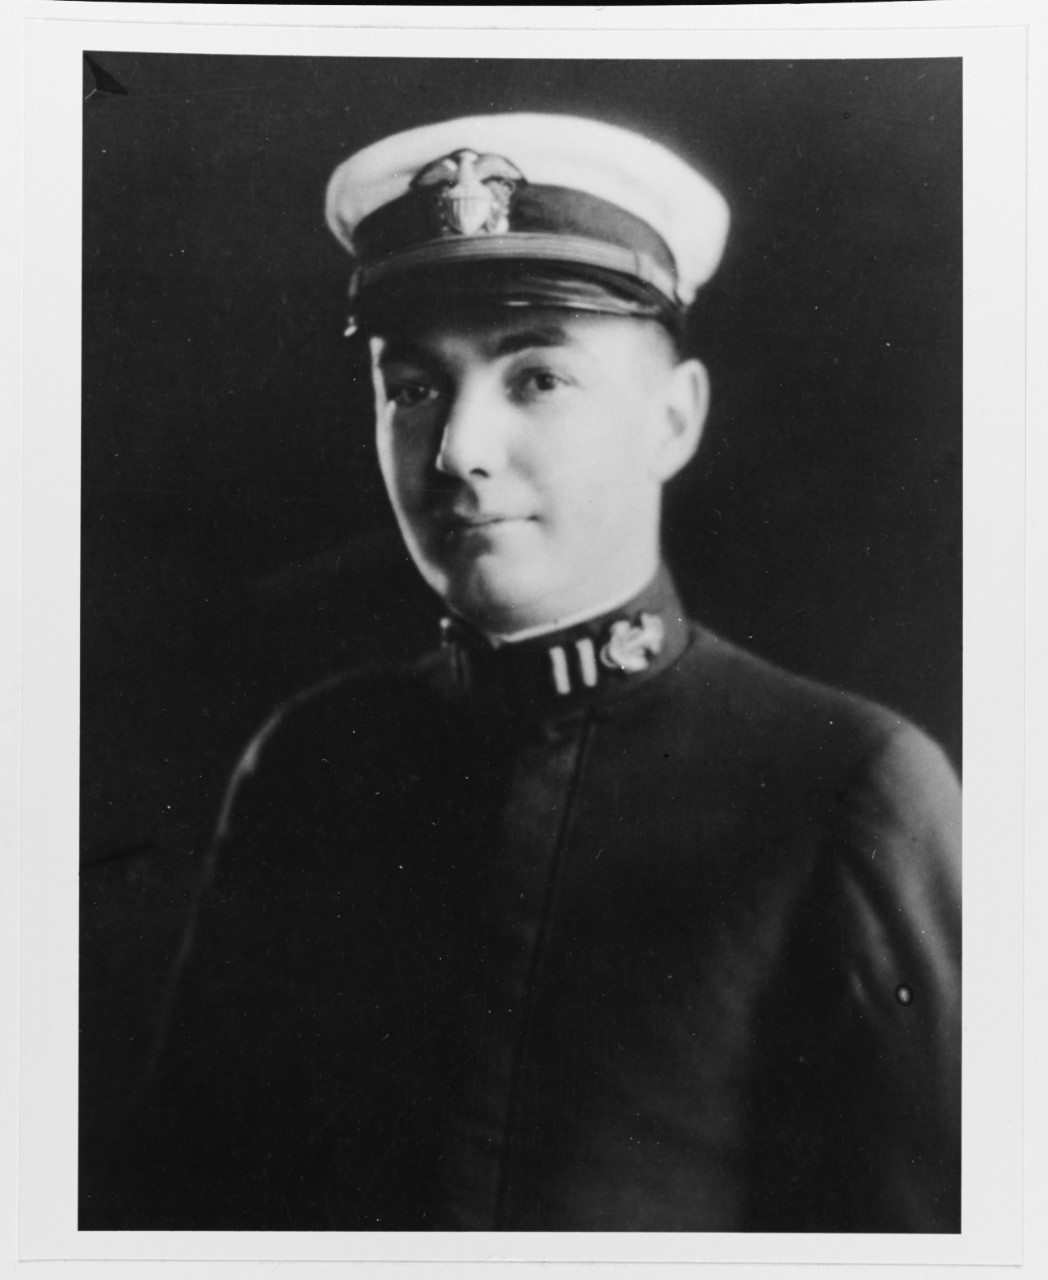 Lieutenant Thomas N. Page, USN